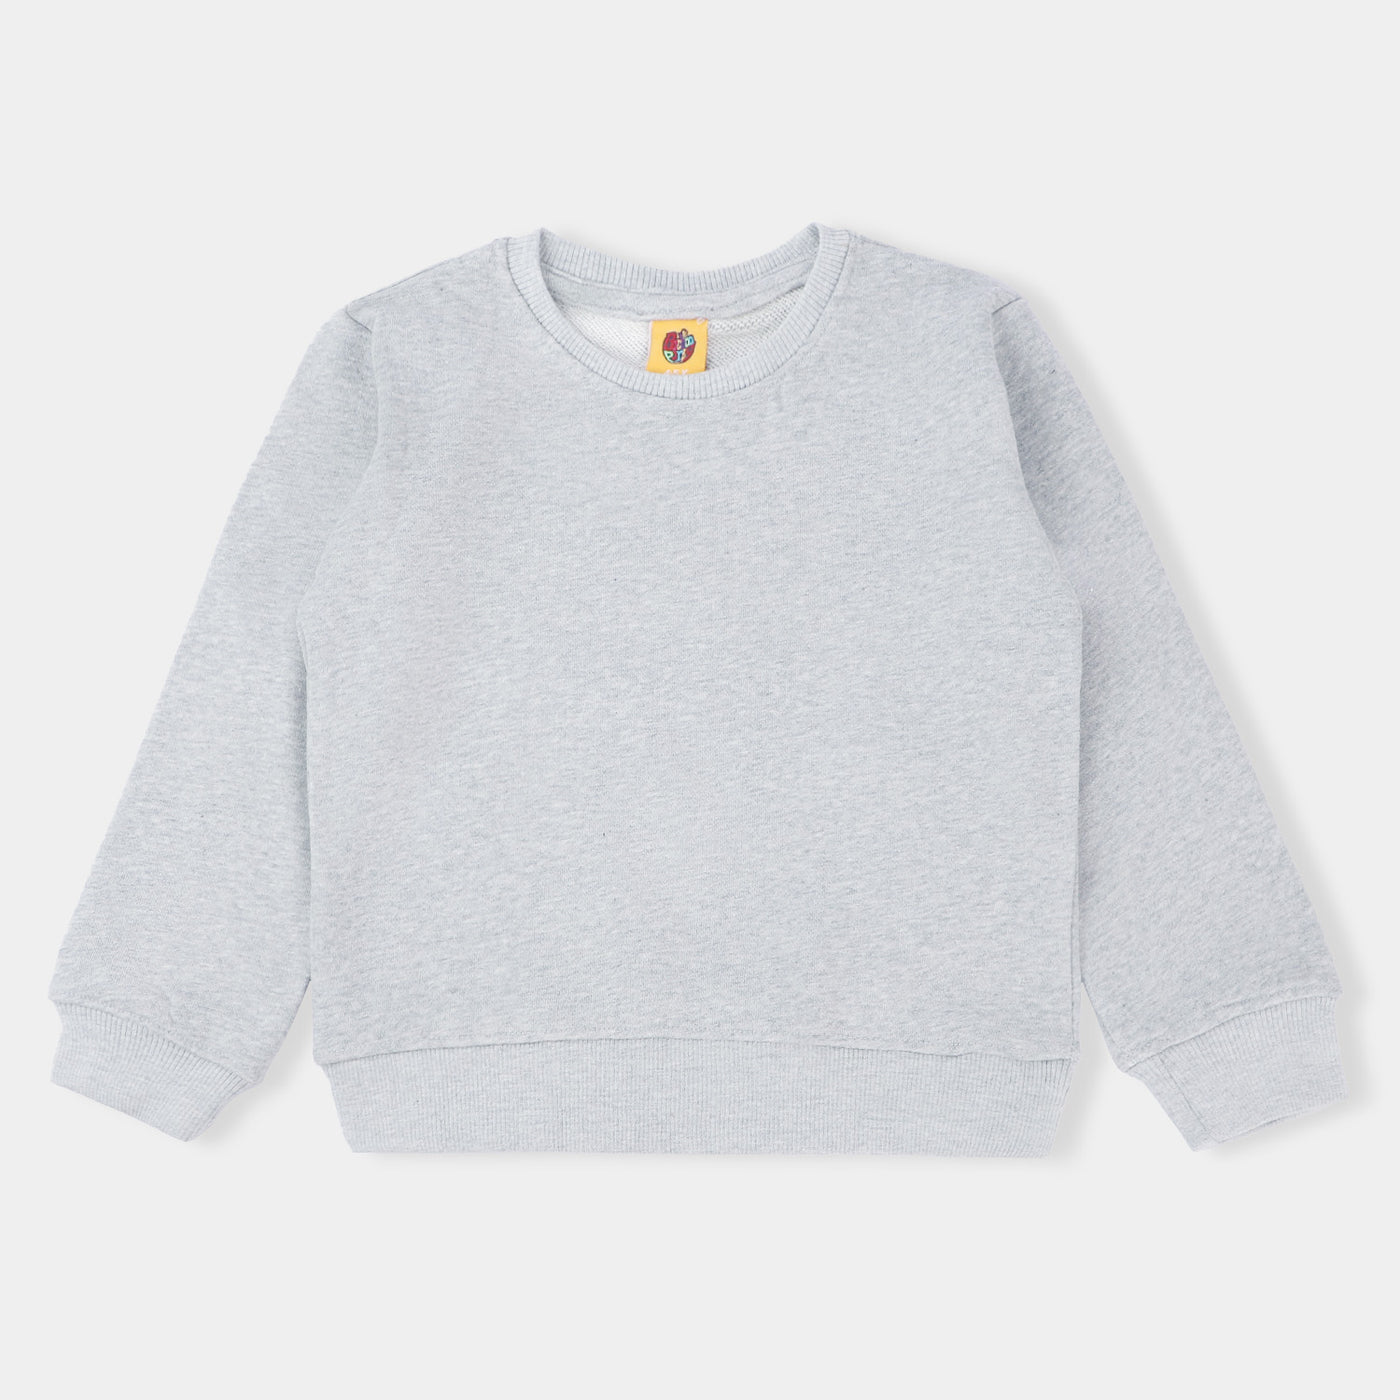 Boys Fleece Sweatshirt - H. Grey